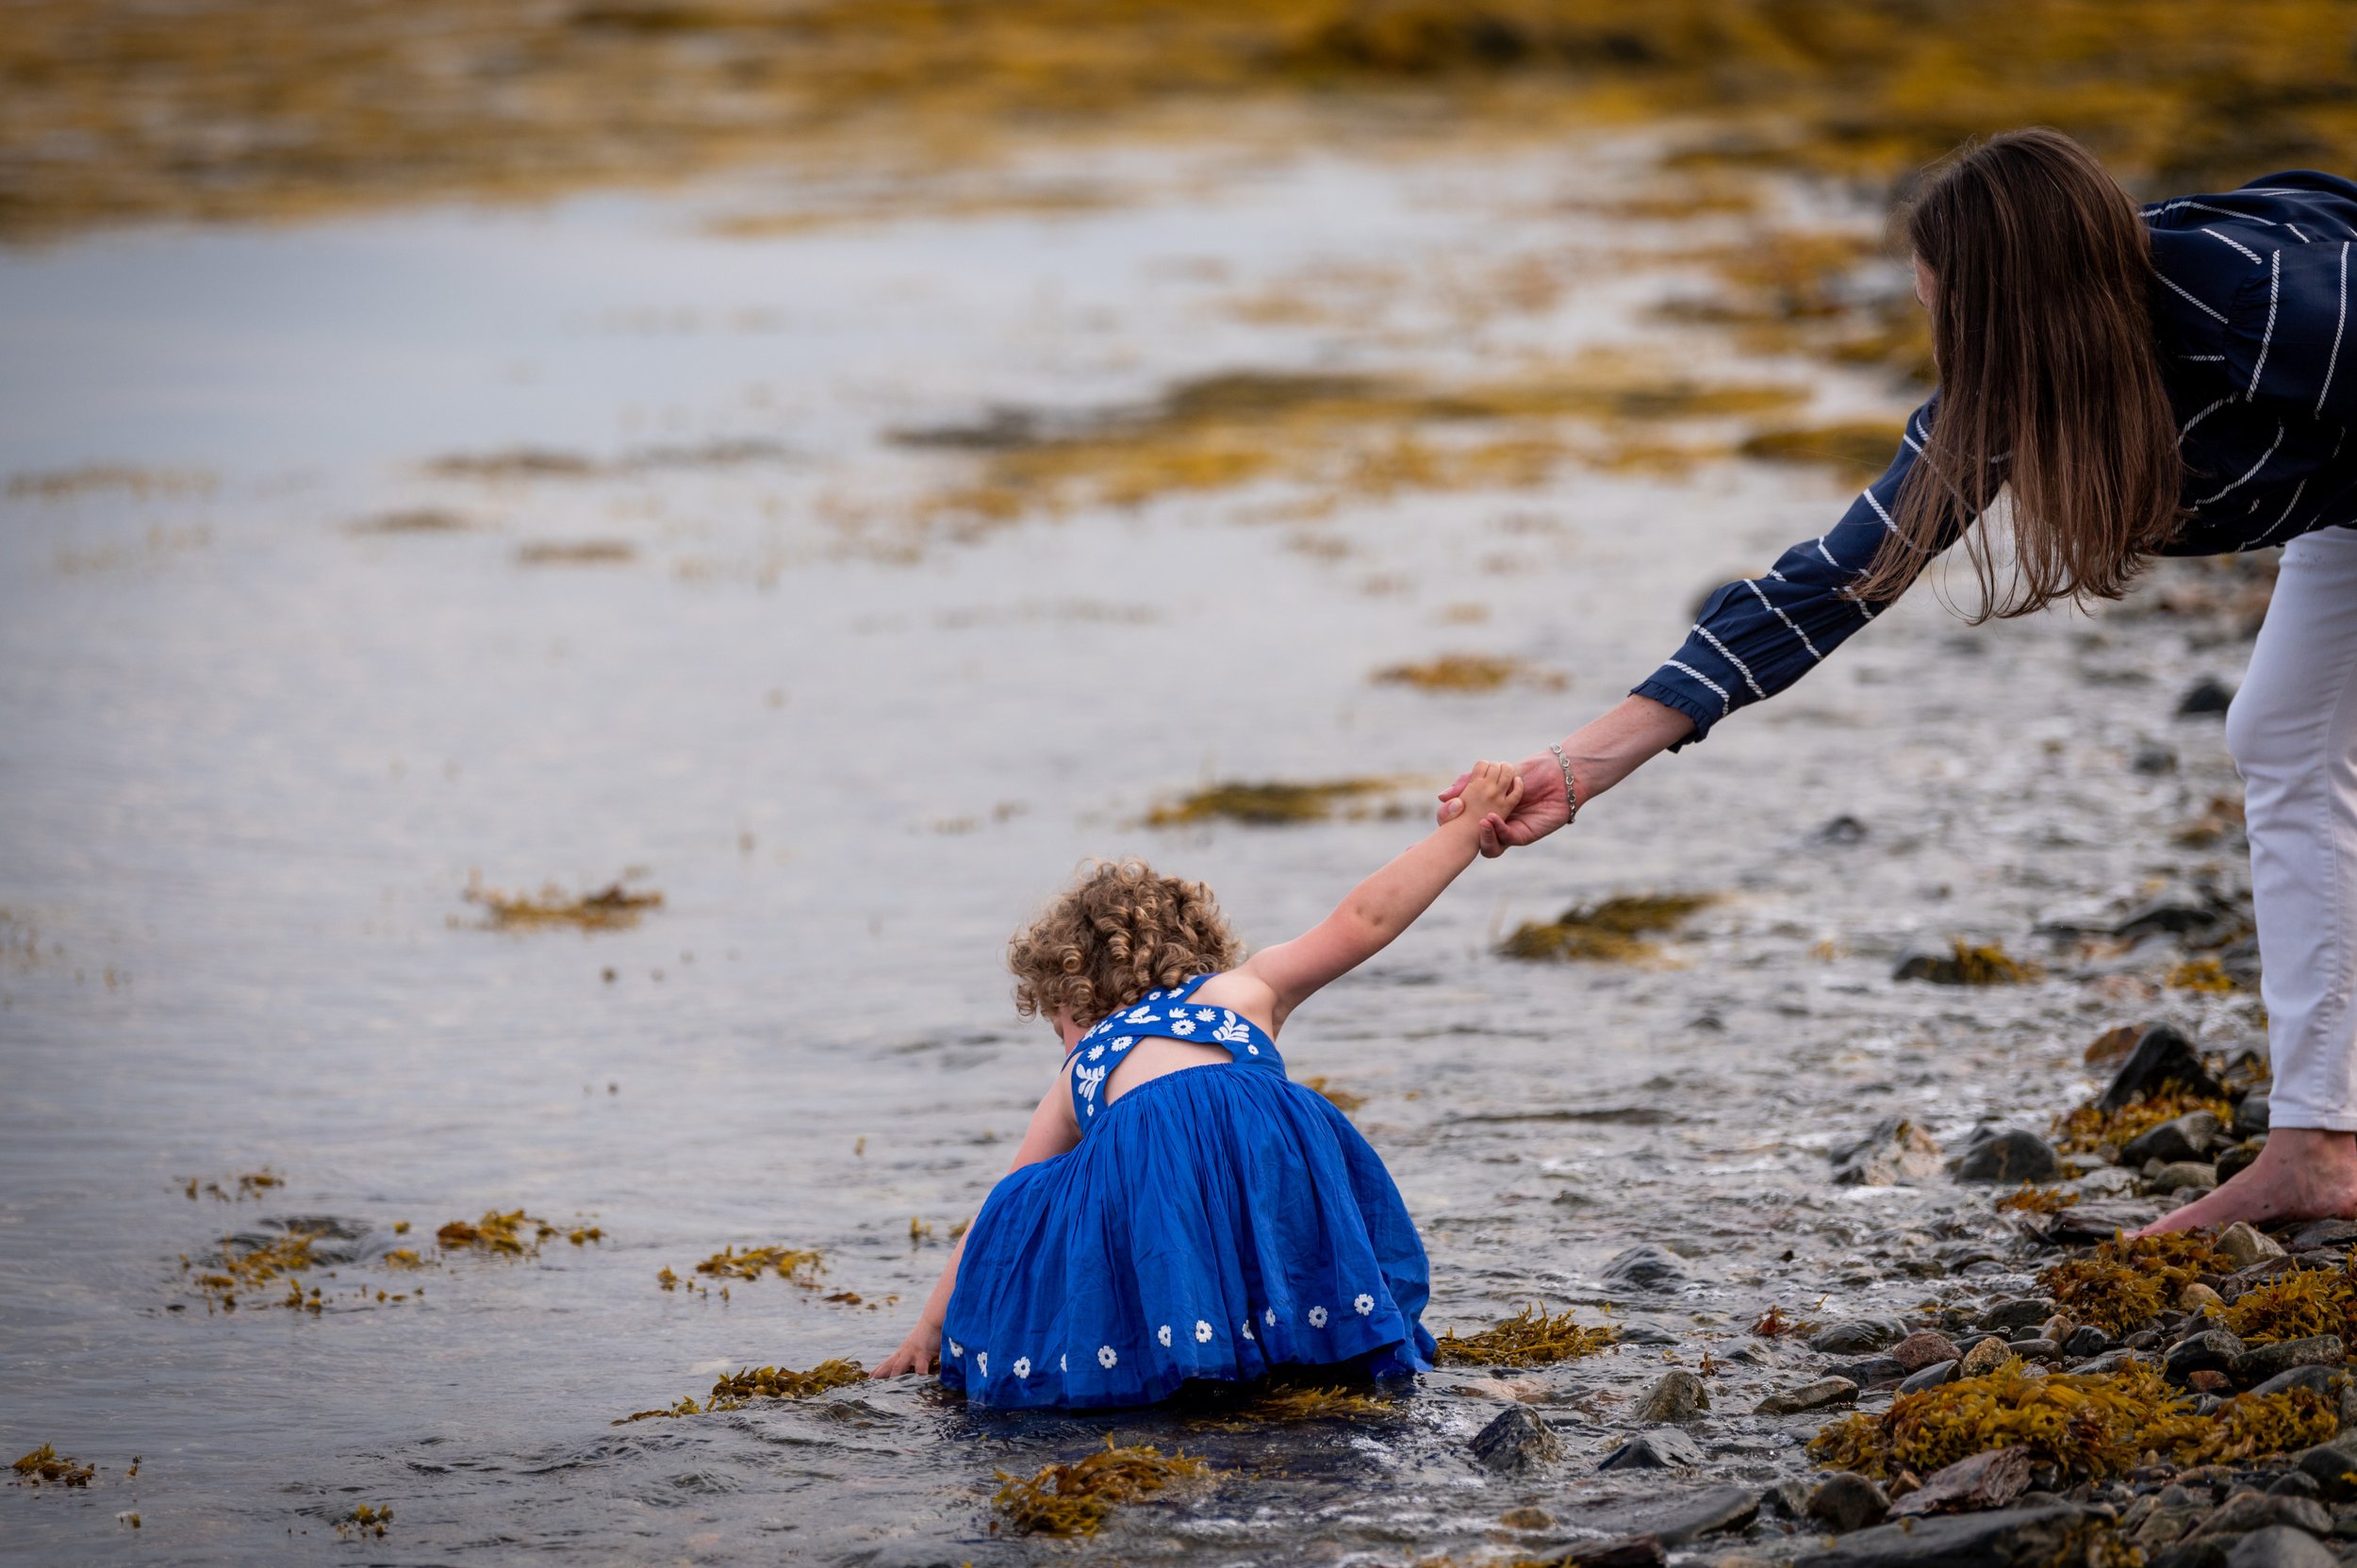 lindsay murphy photography | portland maine family photographer | chebeague island little girl in water.jpg